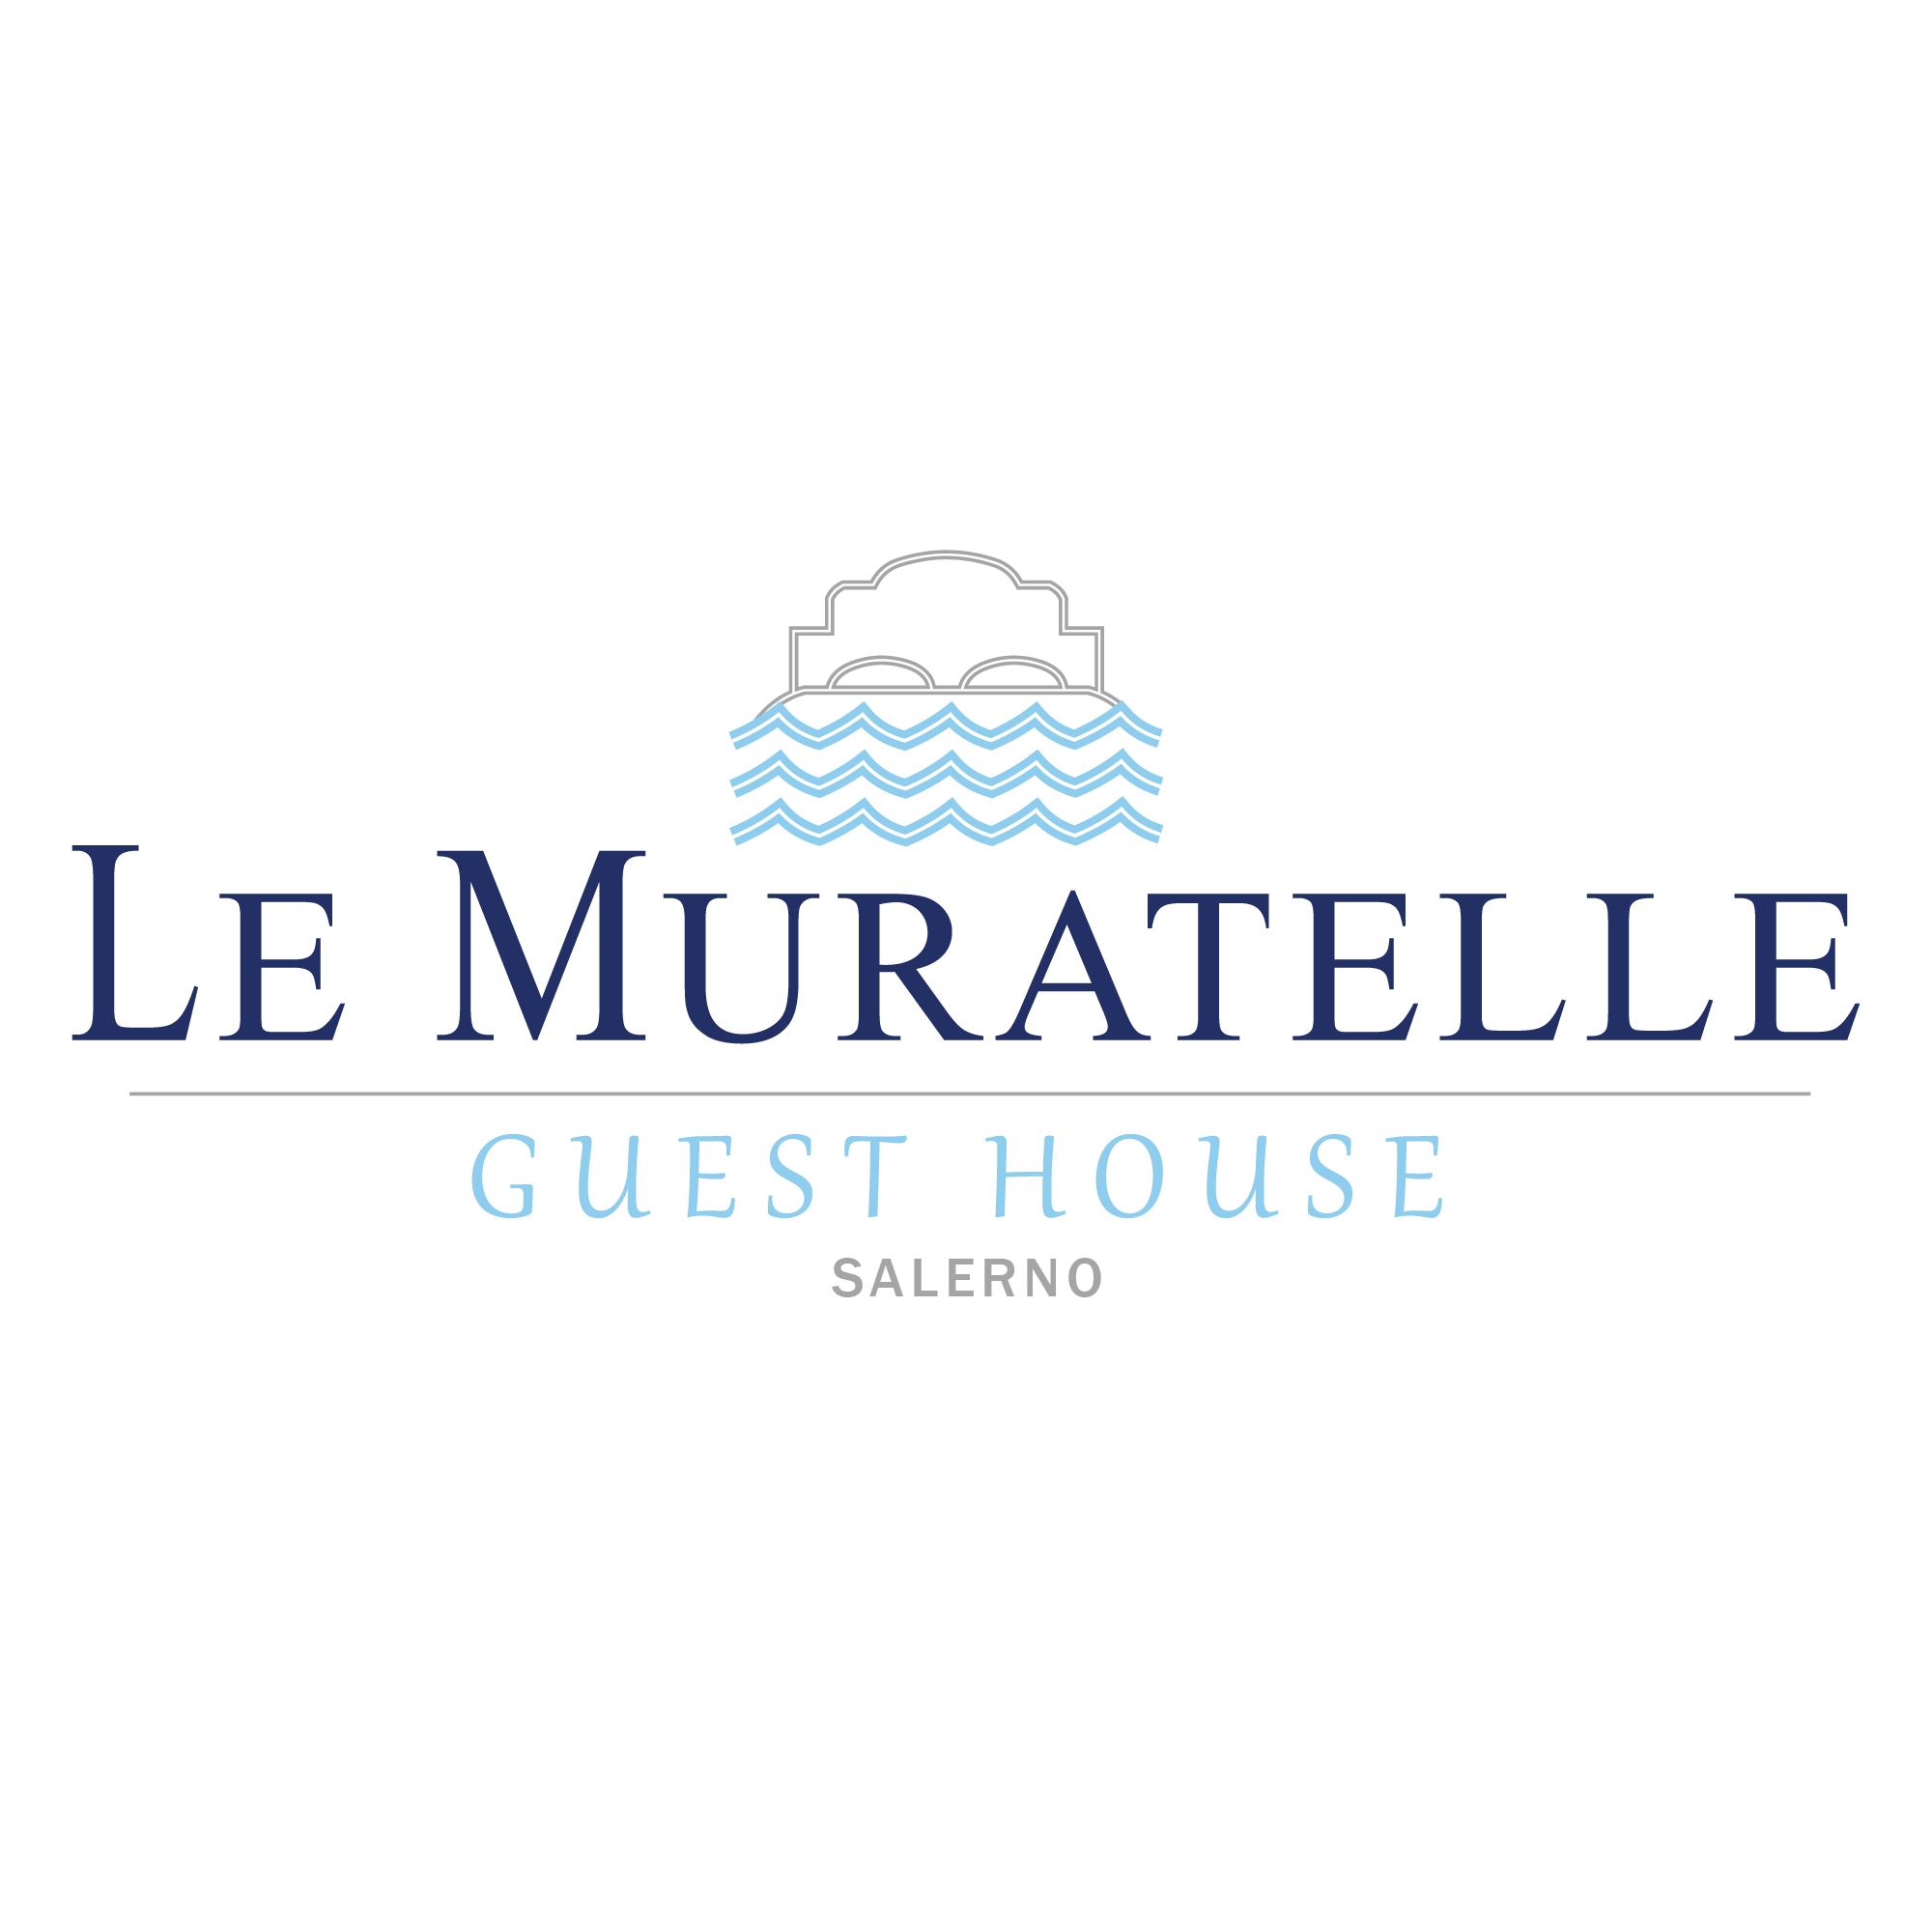 Le Muratelle Guesthouse